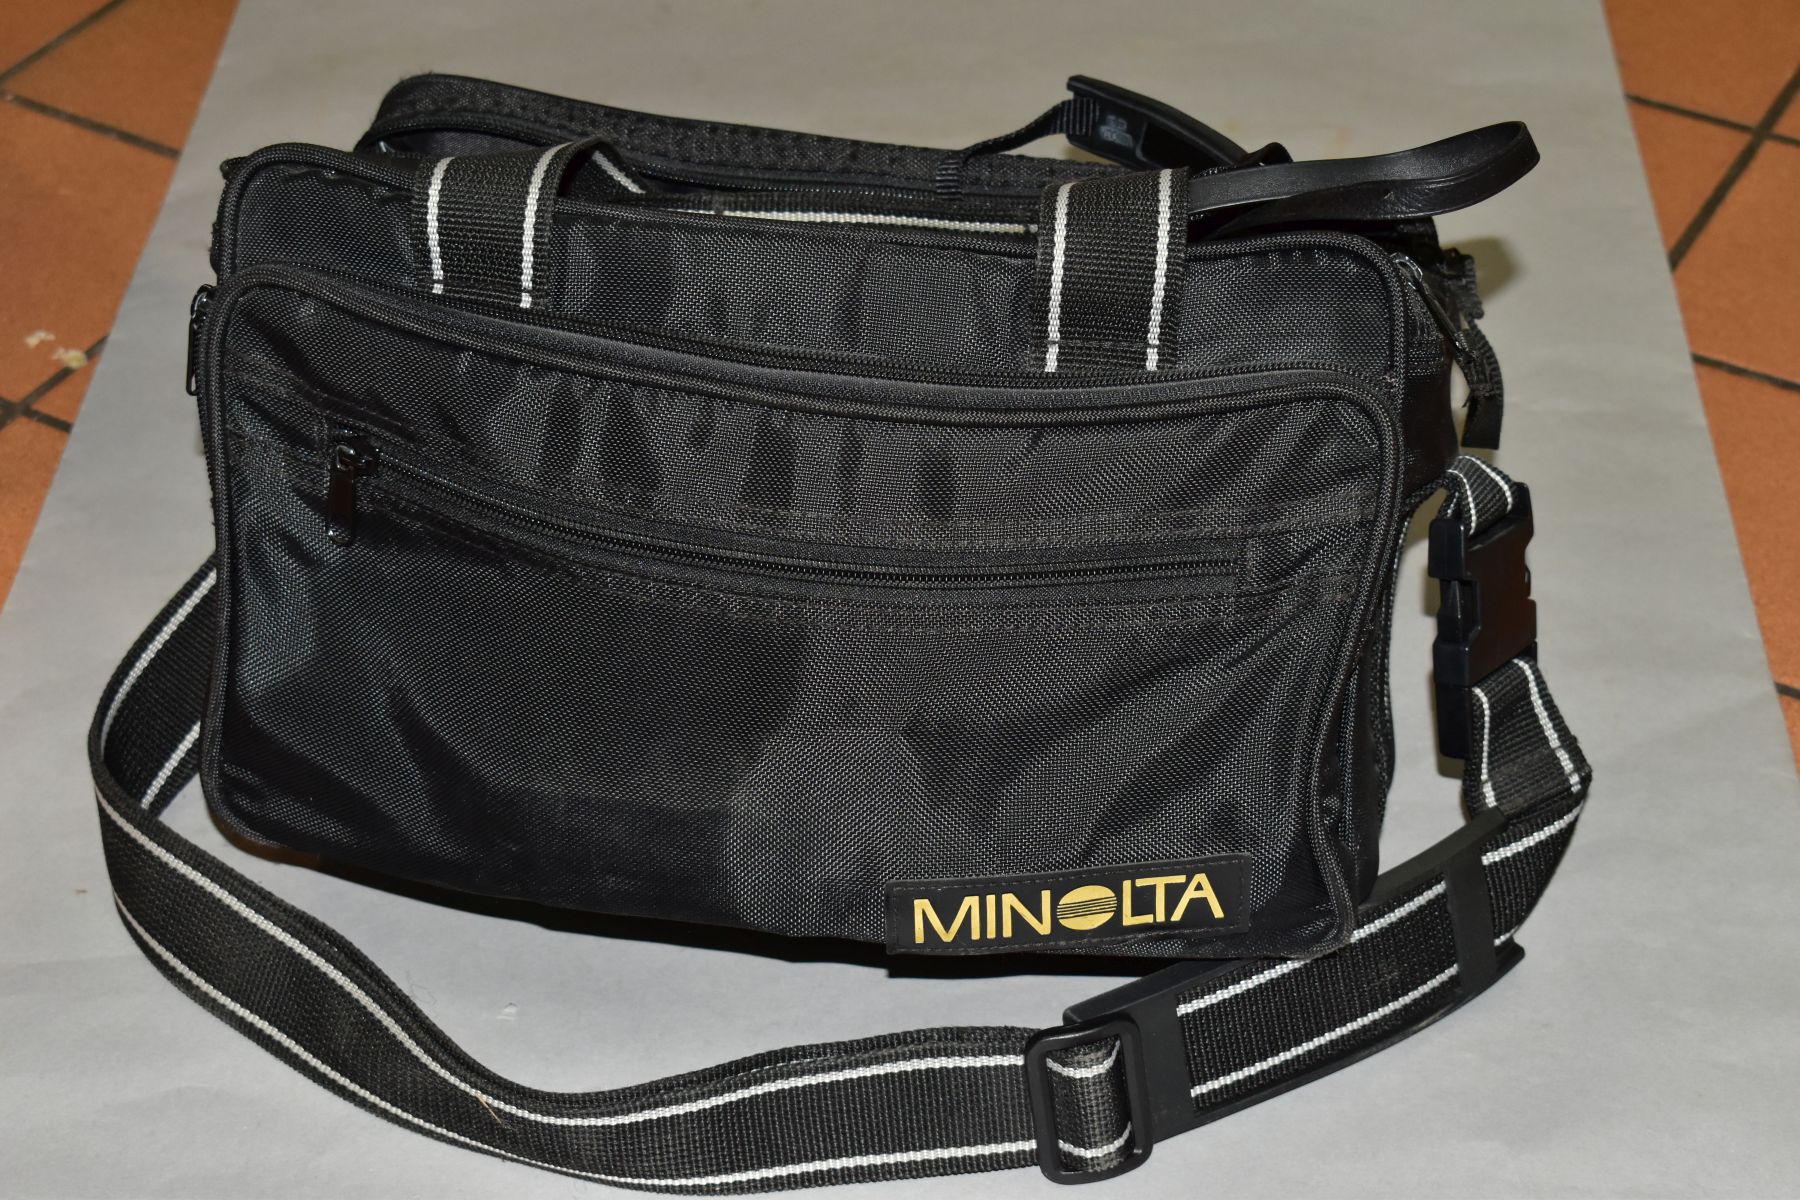 PHOTOGRAPHIC EQUIPMENT comprising a Minolta Dynax 300SI camera body, Minolta 35-70 zoom lens, - Image 9 of 9